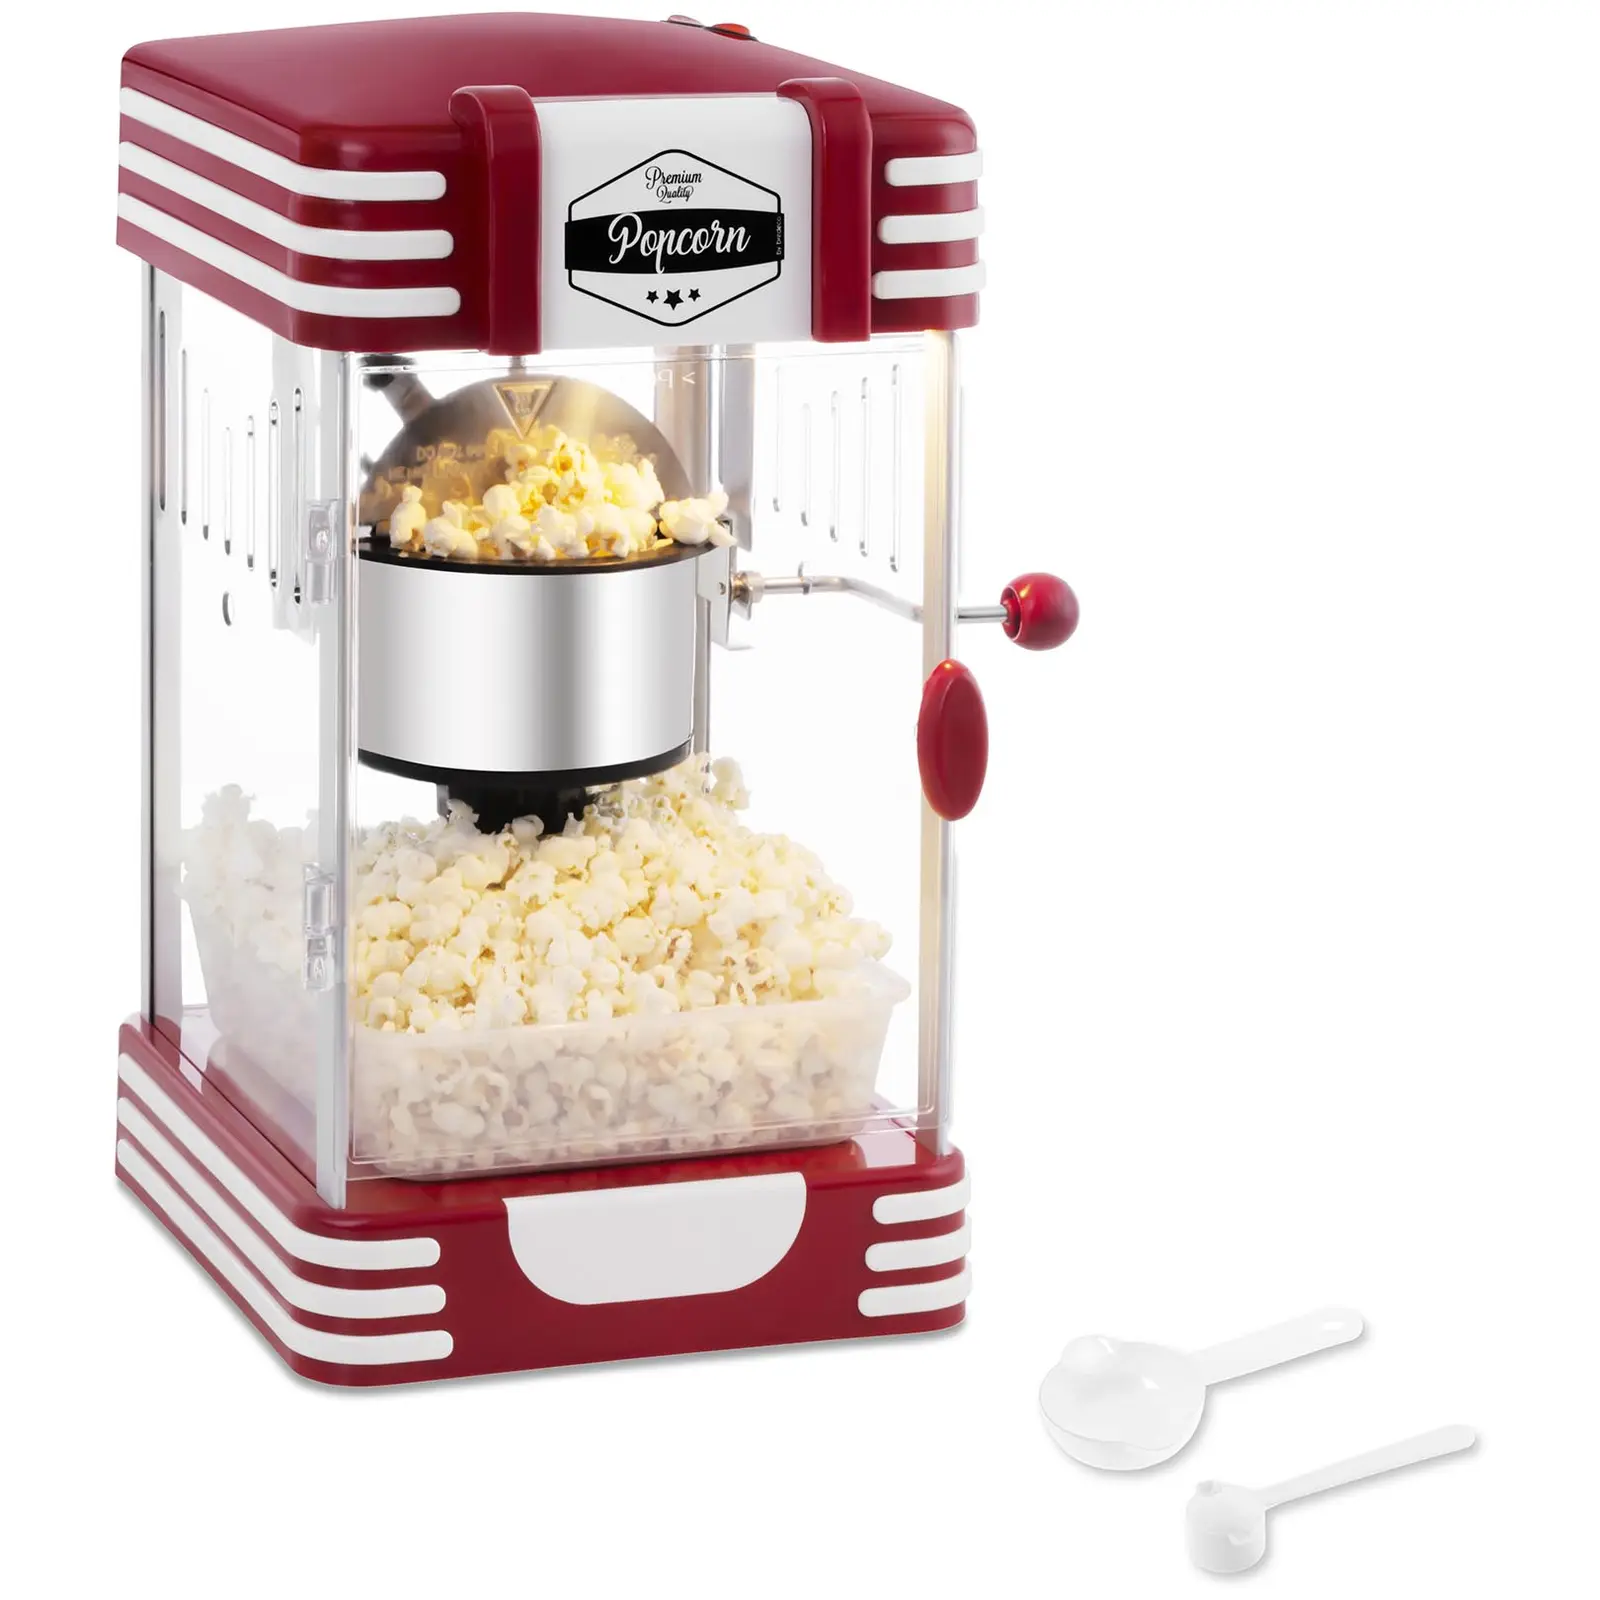 Stroj na popcorn - 50. léta retro design - červený